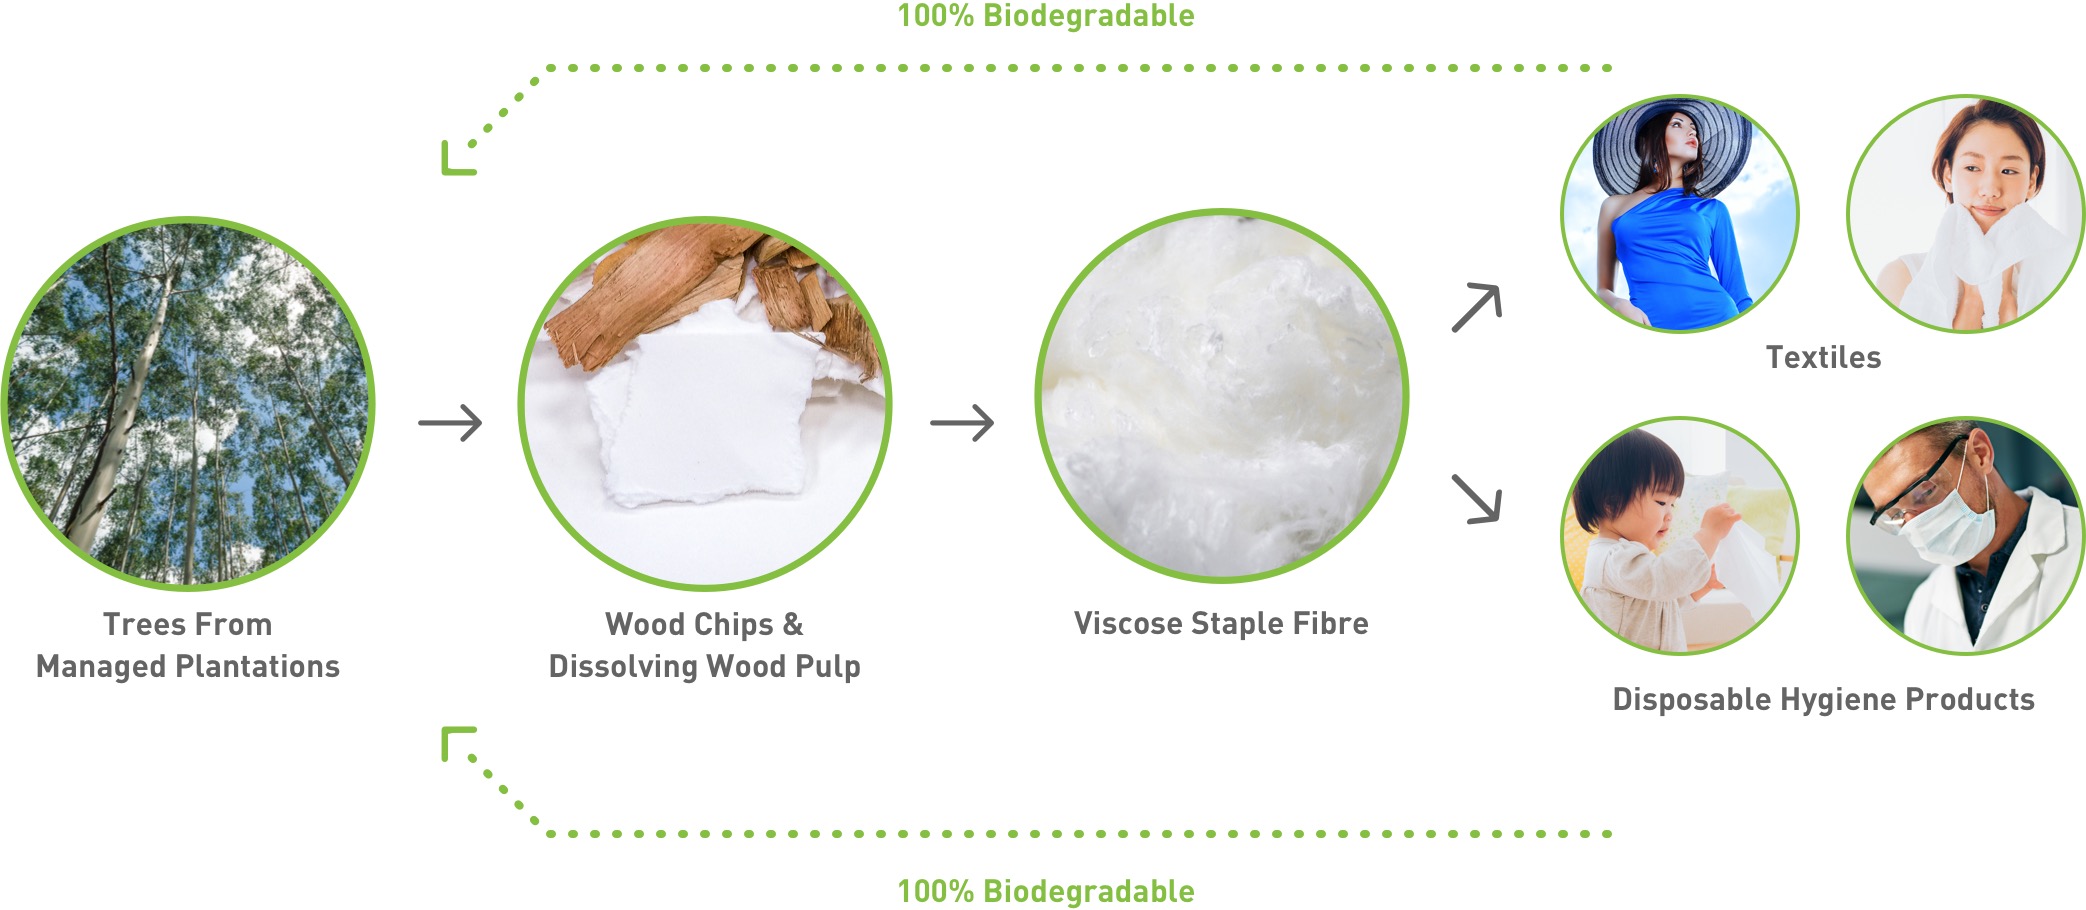 Viscose Rayon Manufacturing Process – 100% Biodegradable